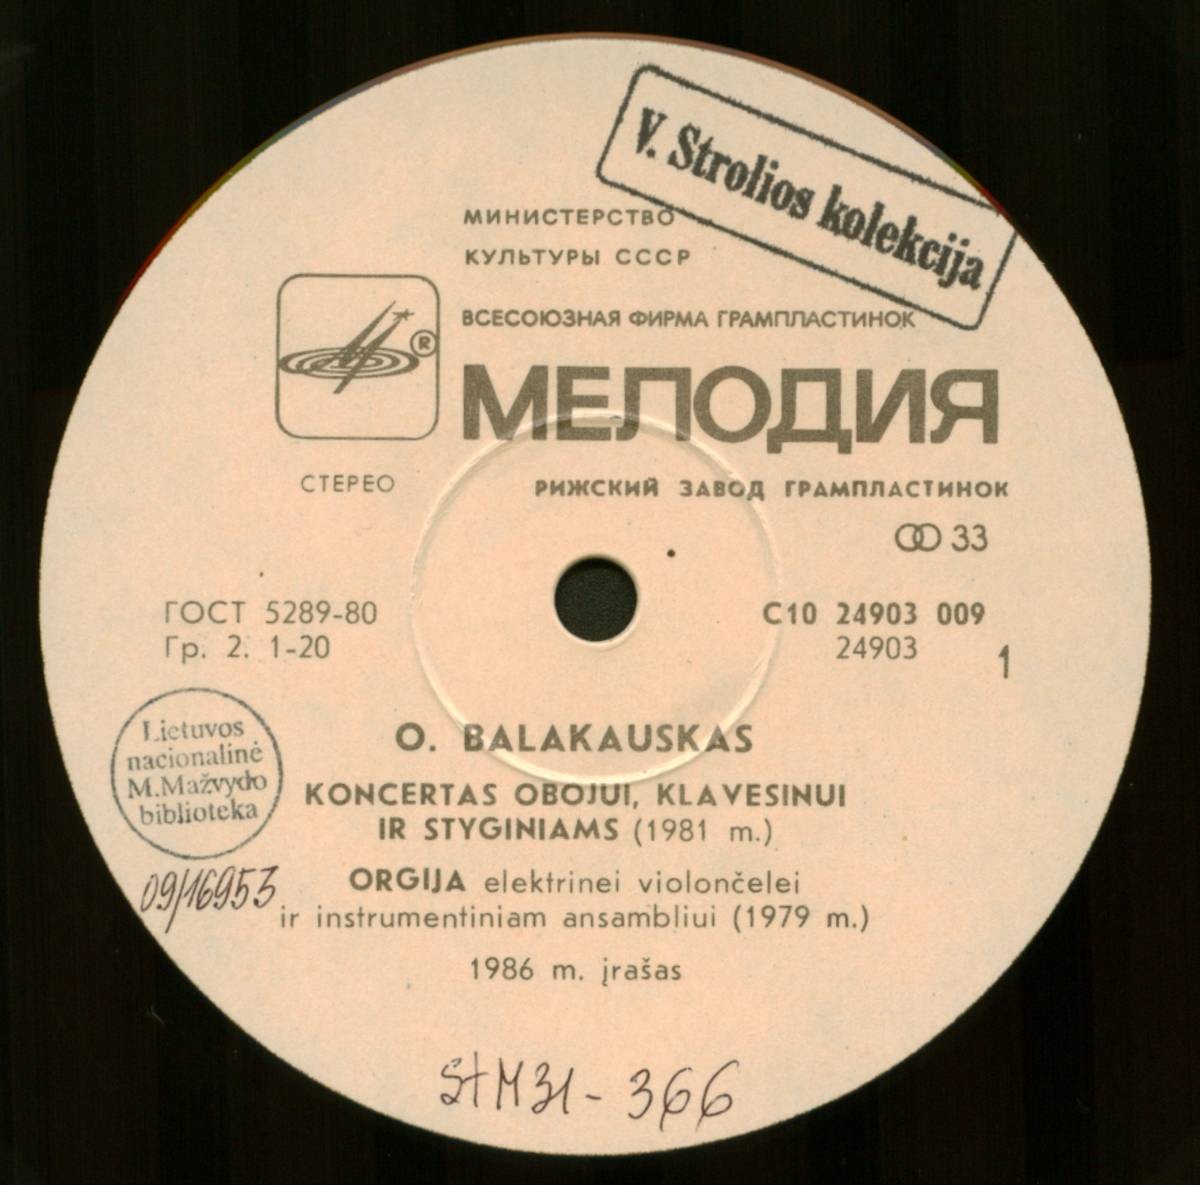 О. БАЛАКАУСКАС (1937)